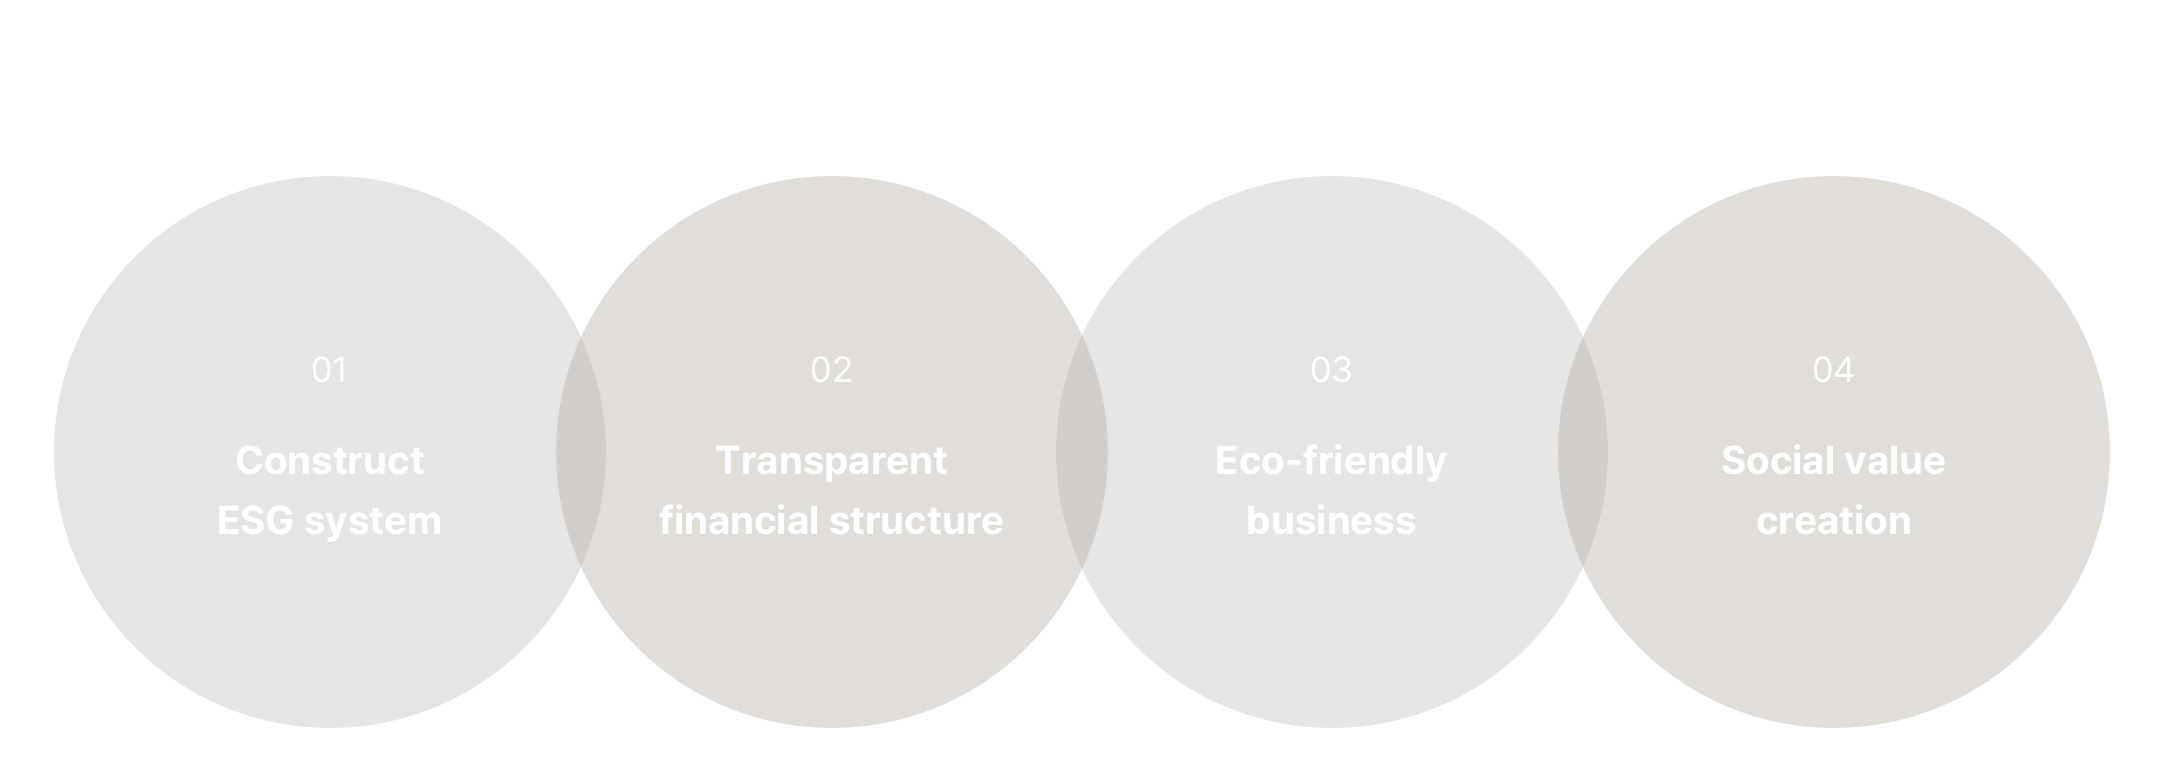 Action Plan : 01 Construct ESG System / 02 Transparent financial structrue / 03 Eco-friendly business / 04 Social value creation